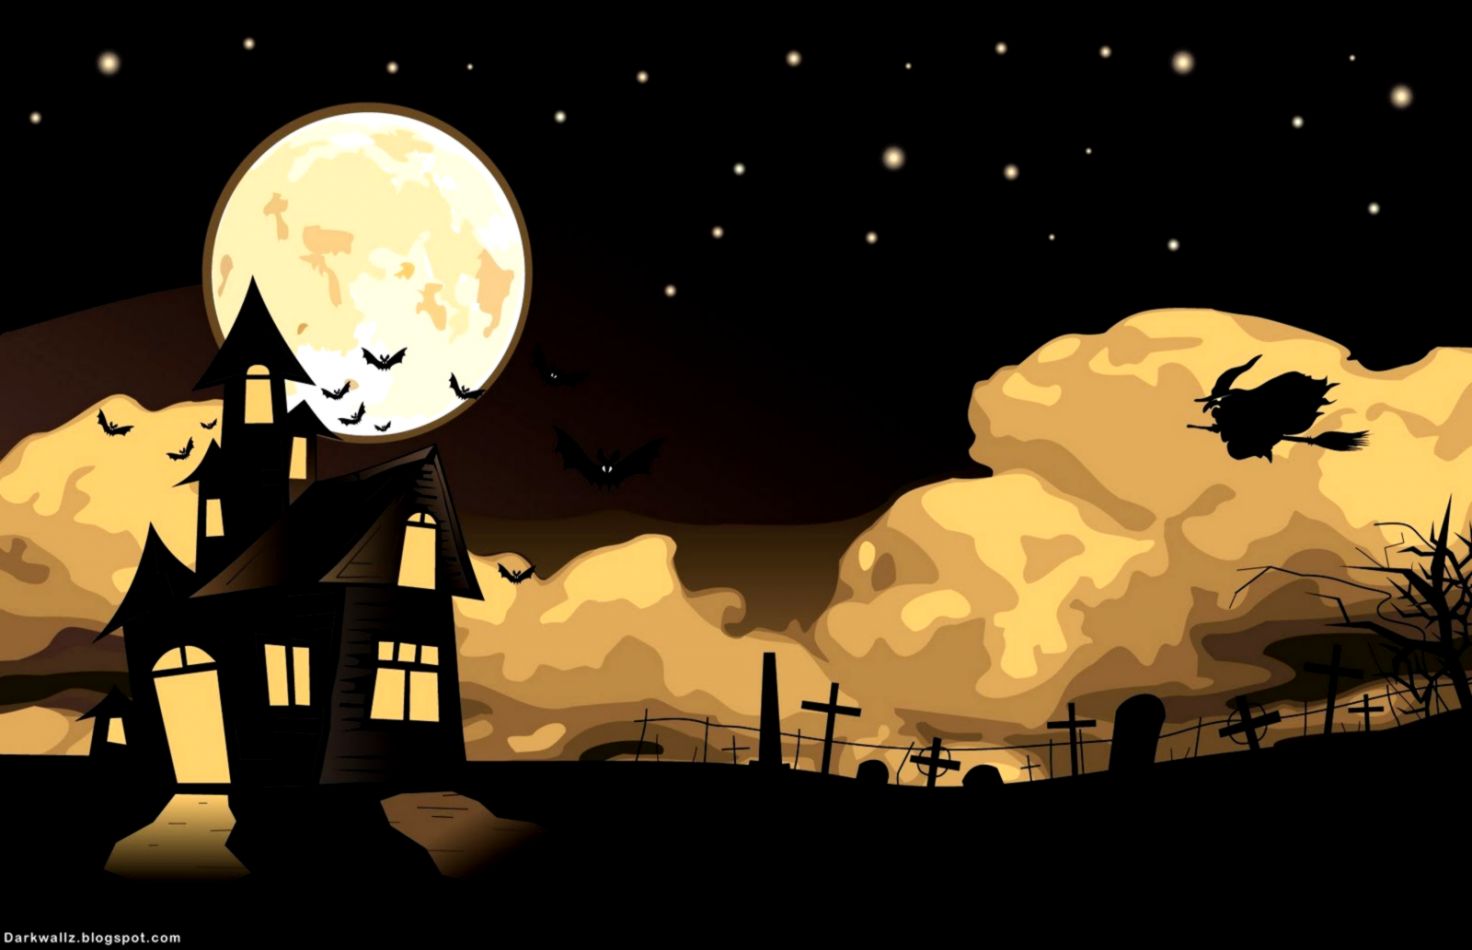 Gallery For Gt Cute Halloween Desktop Background